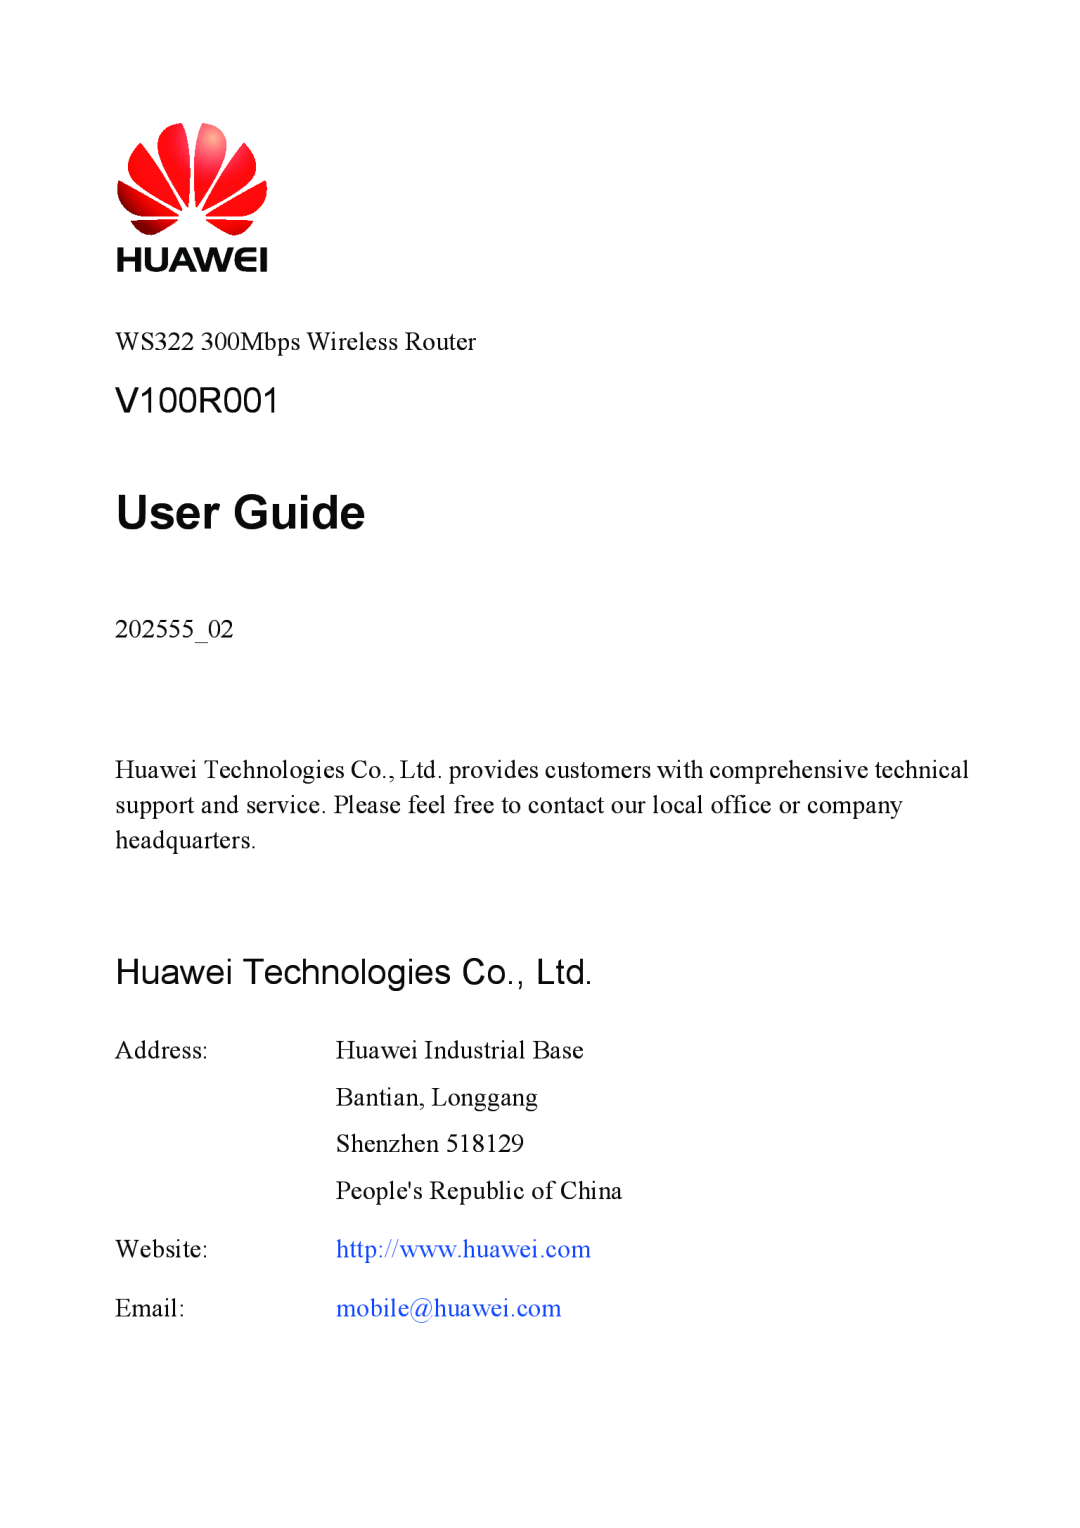 Huawei WS322 manual User Guide, V100R001, mobile@huawei.com 